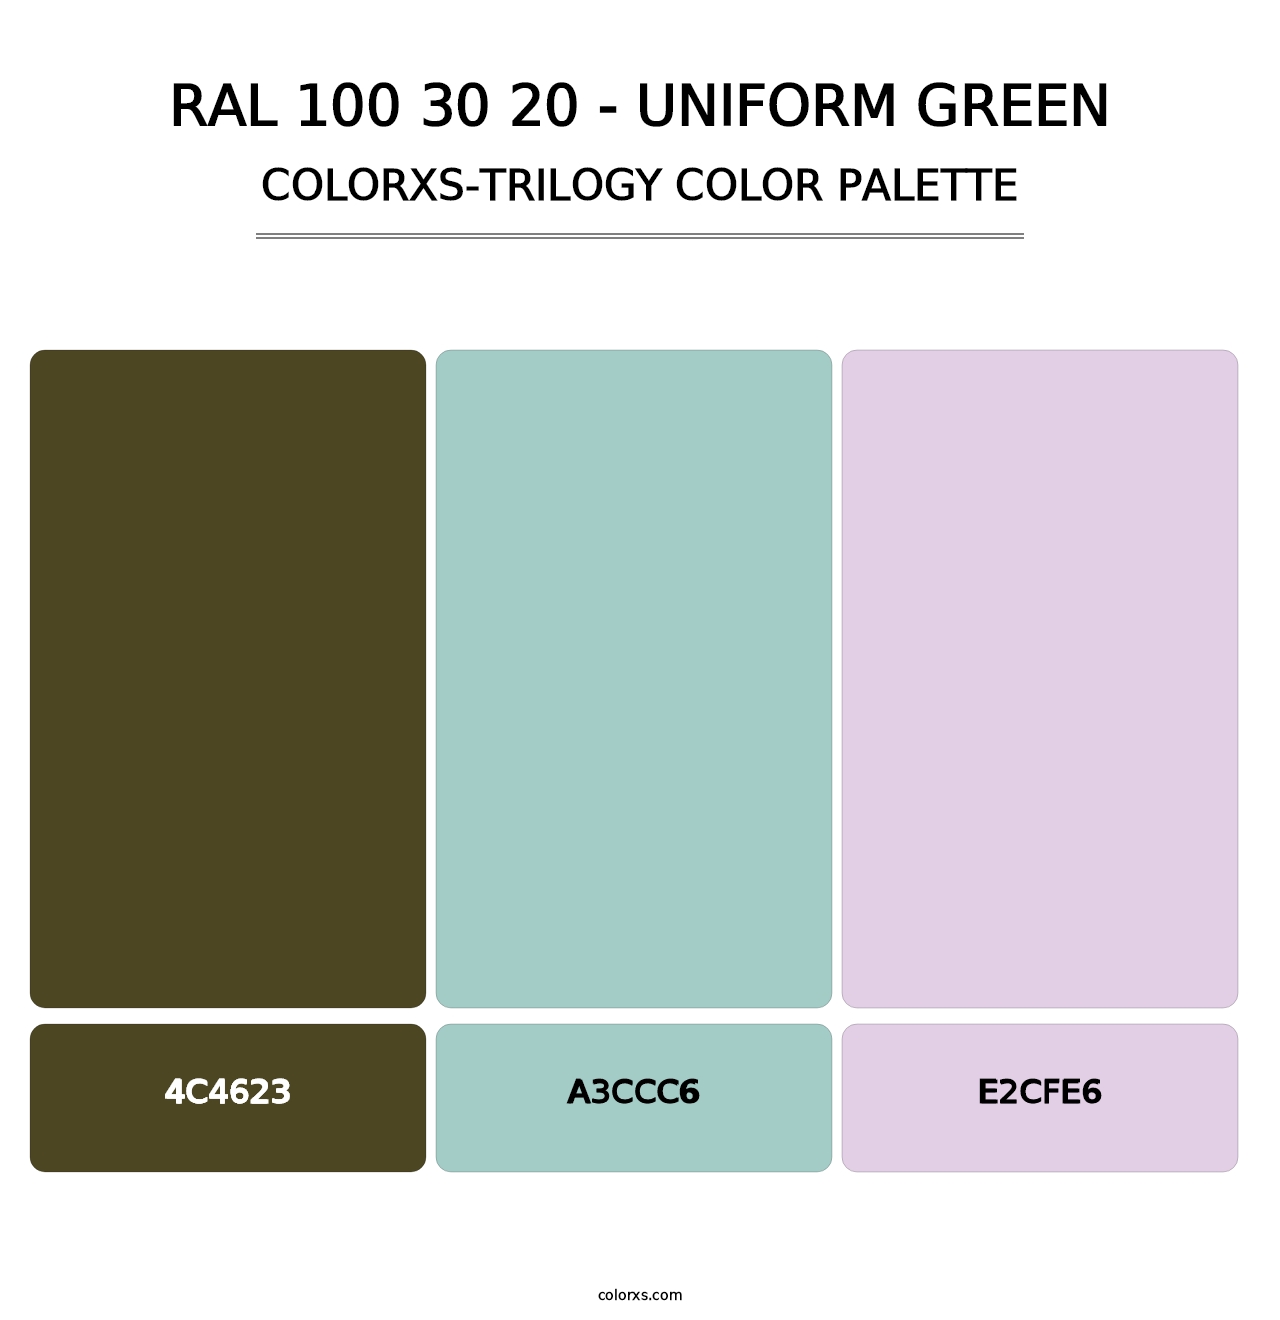 RAL 100 30 20 - Uniform Green - Colorxs Trilogy Palette